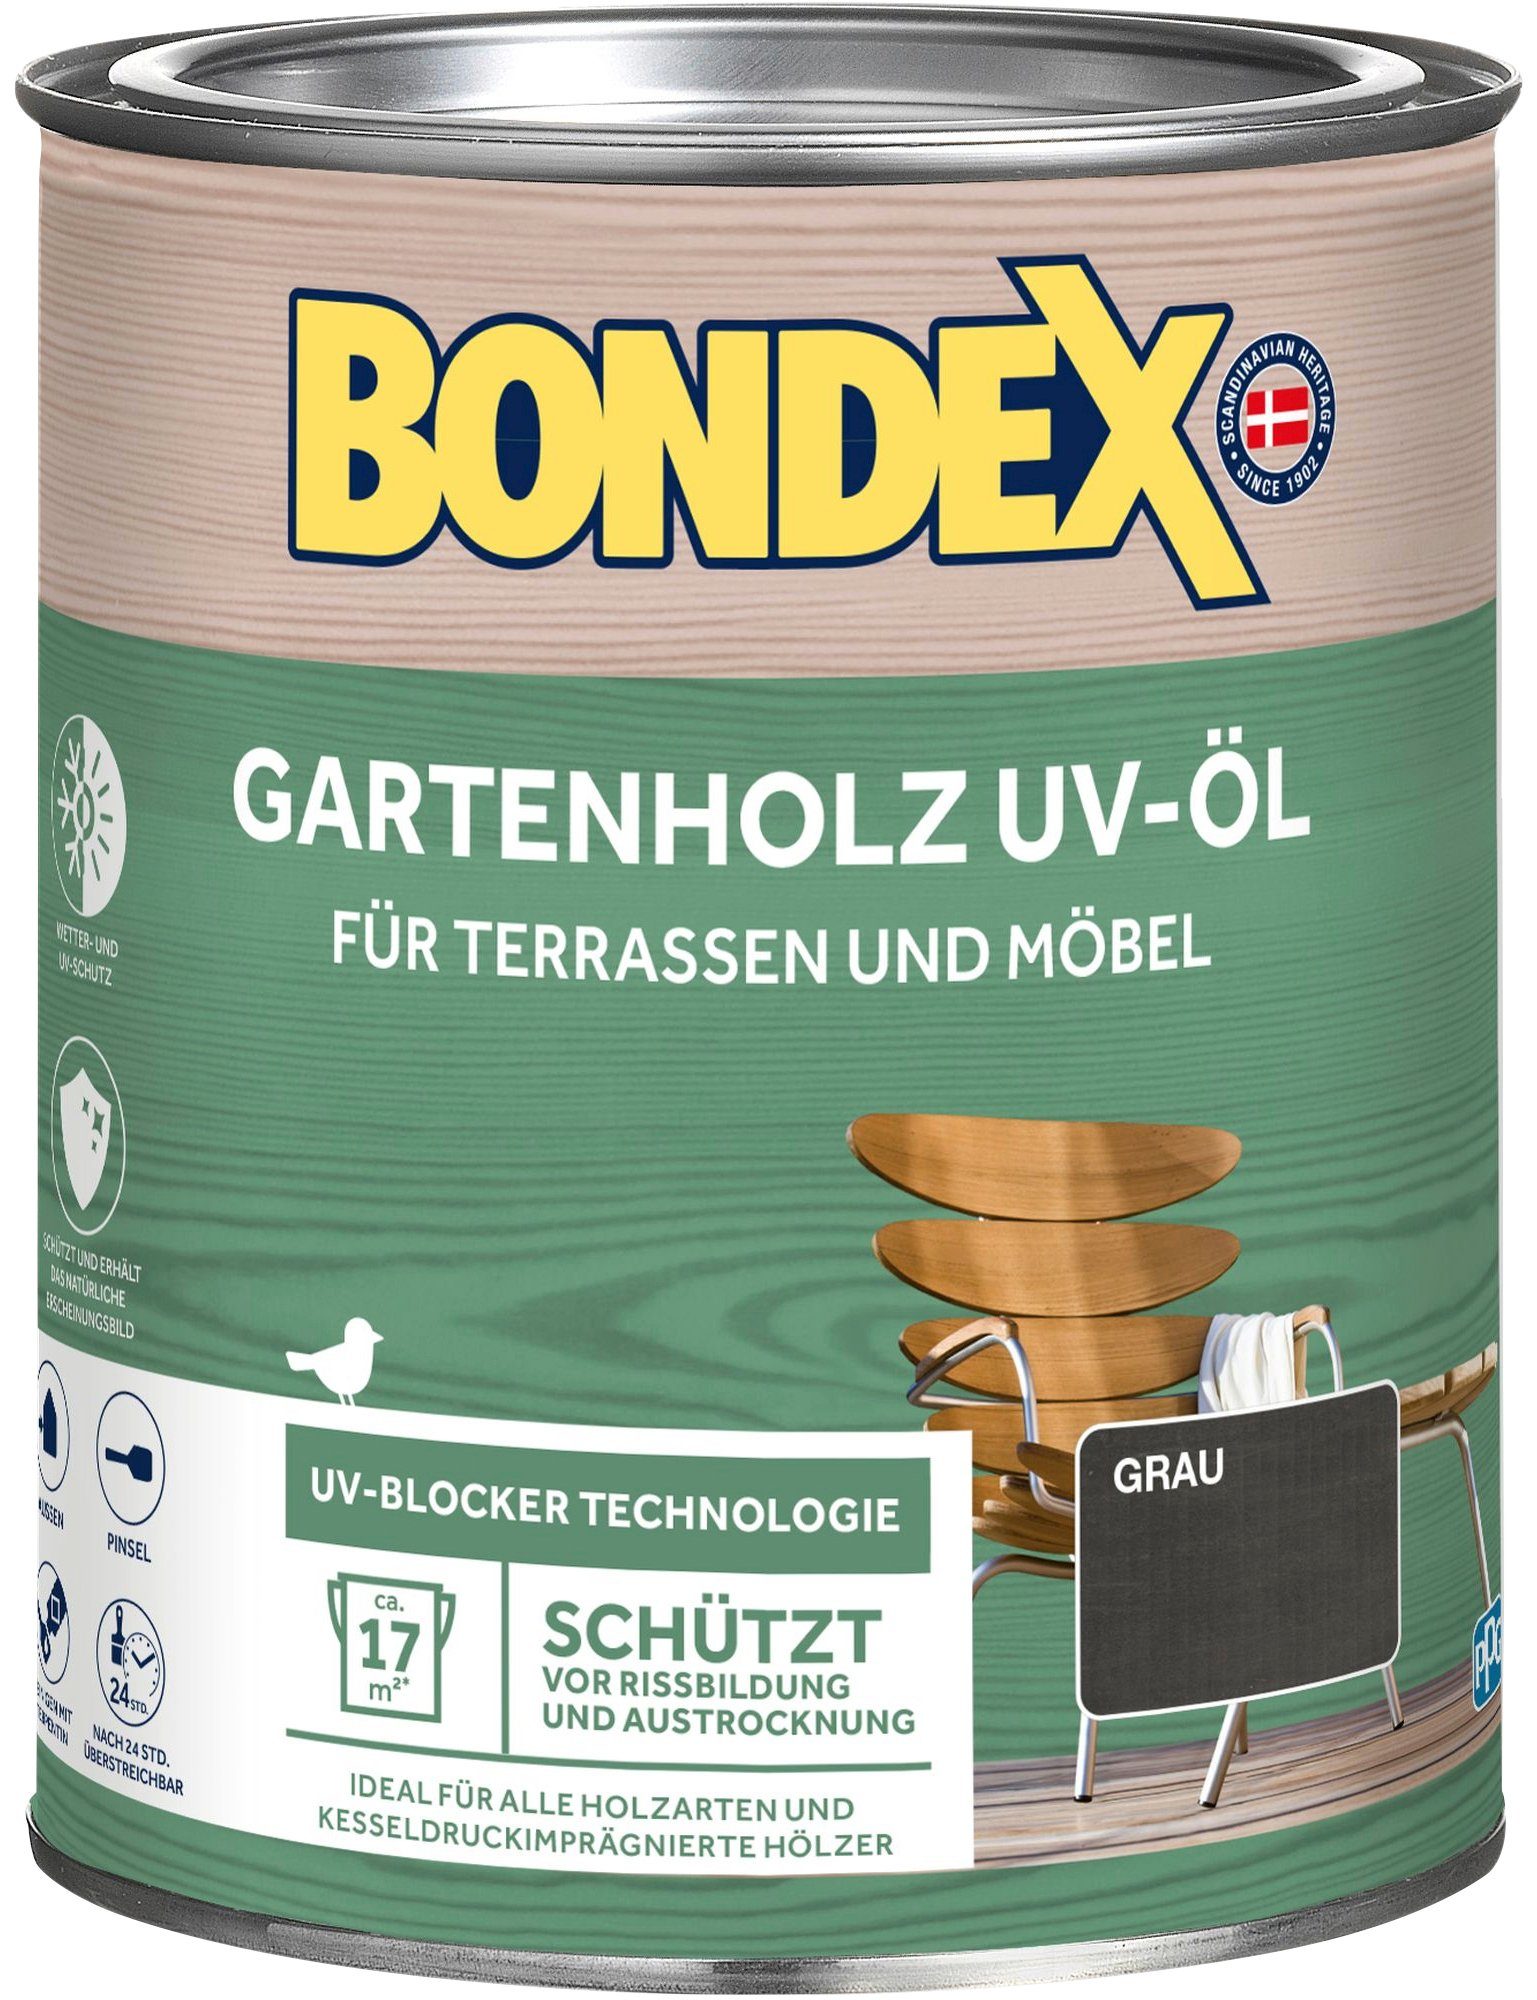 Inhalt Bondex grau 0,75 Liter Holzöl UV-ÖL, Farblos, GARTENHOLZ